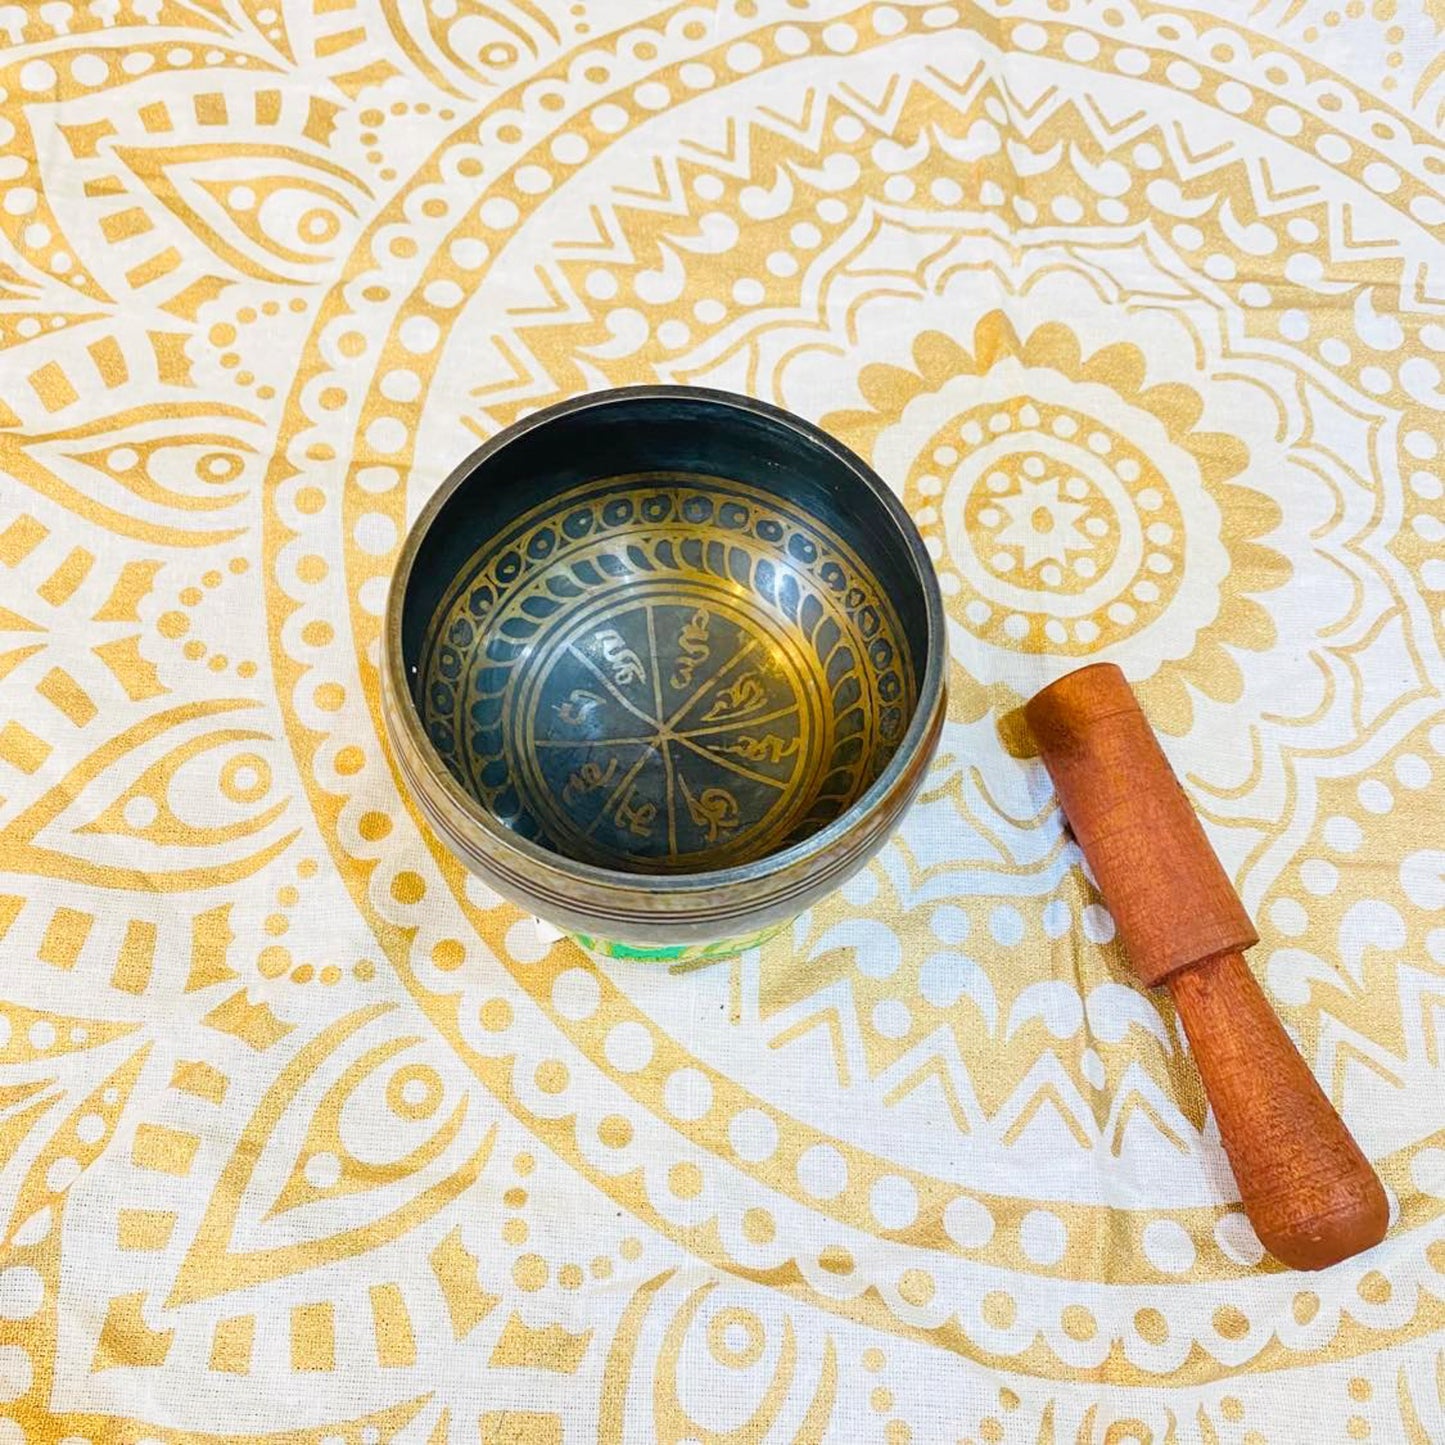 4 inches Healing Mantra Engraved Singing Bowl